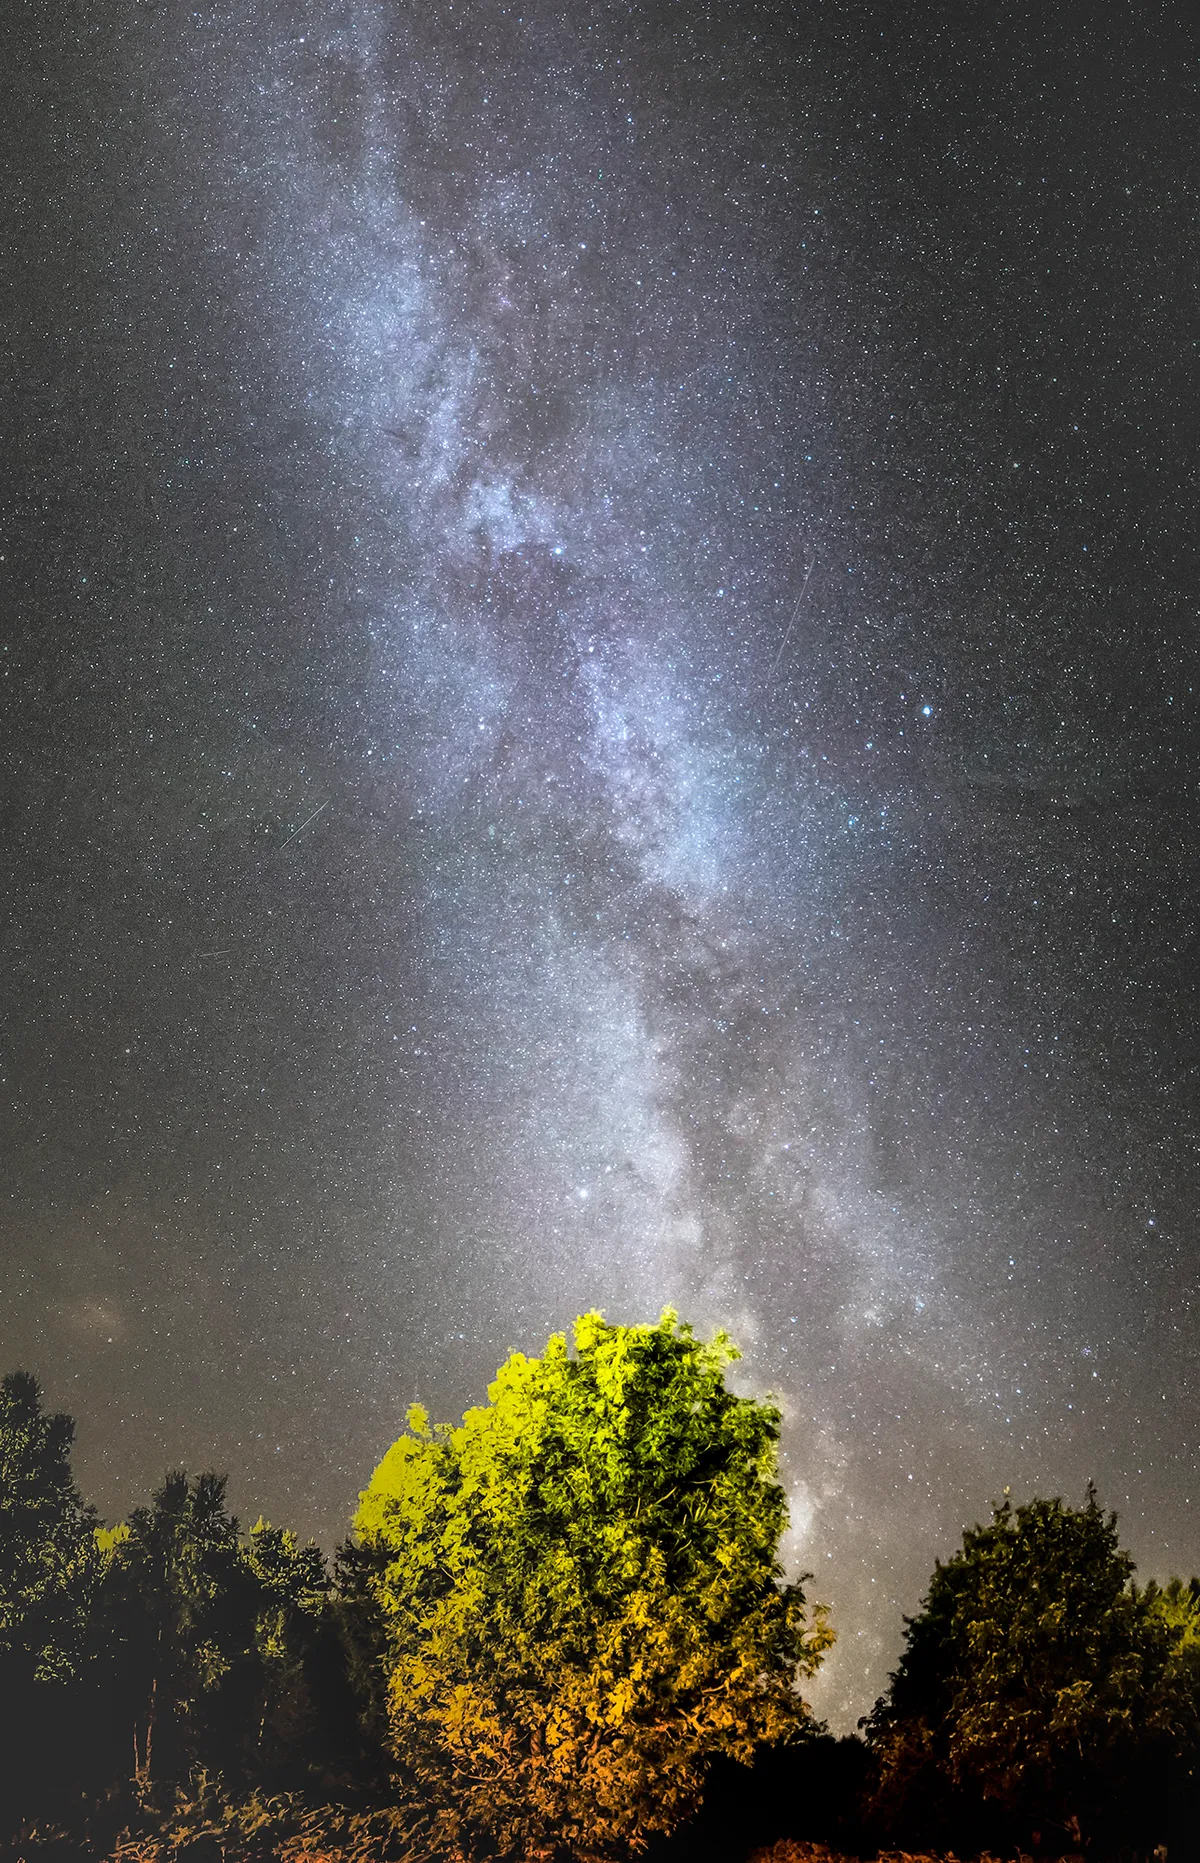 Milky Way Panorama by John Short, Derwent Reservoir, Durham, UK. Equipment: Sony A7's, Samyang 14mm lens.